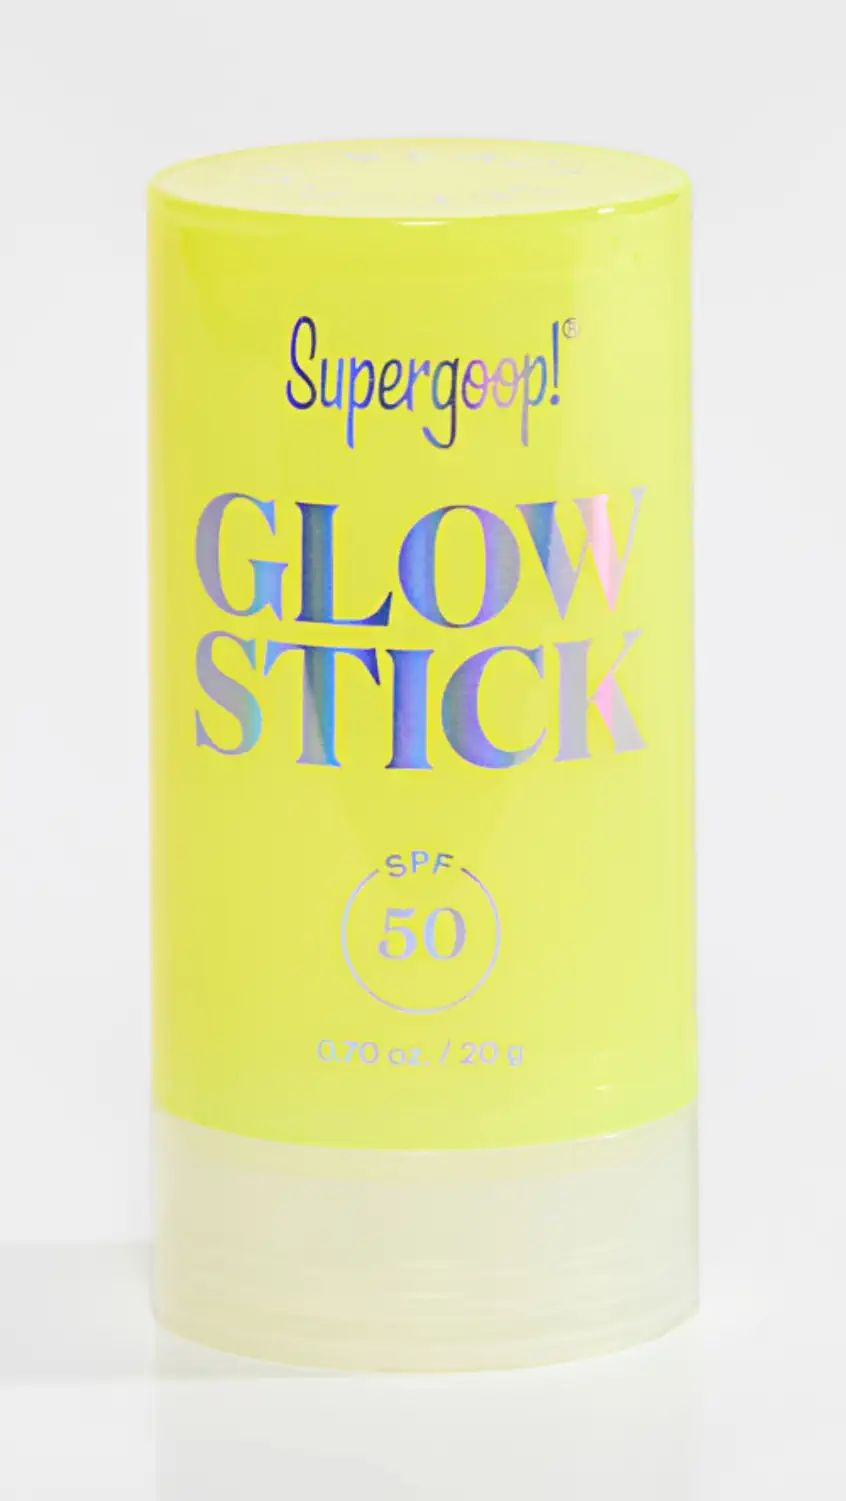 Glow Stick SPF 50 | Shopbop